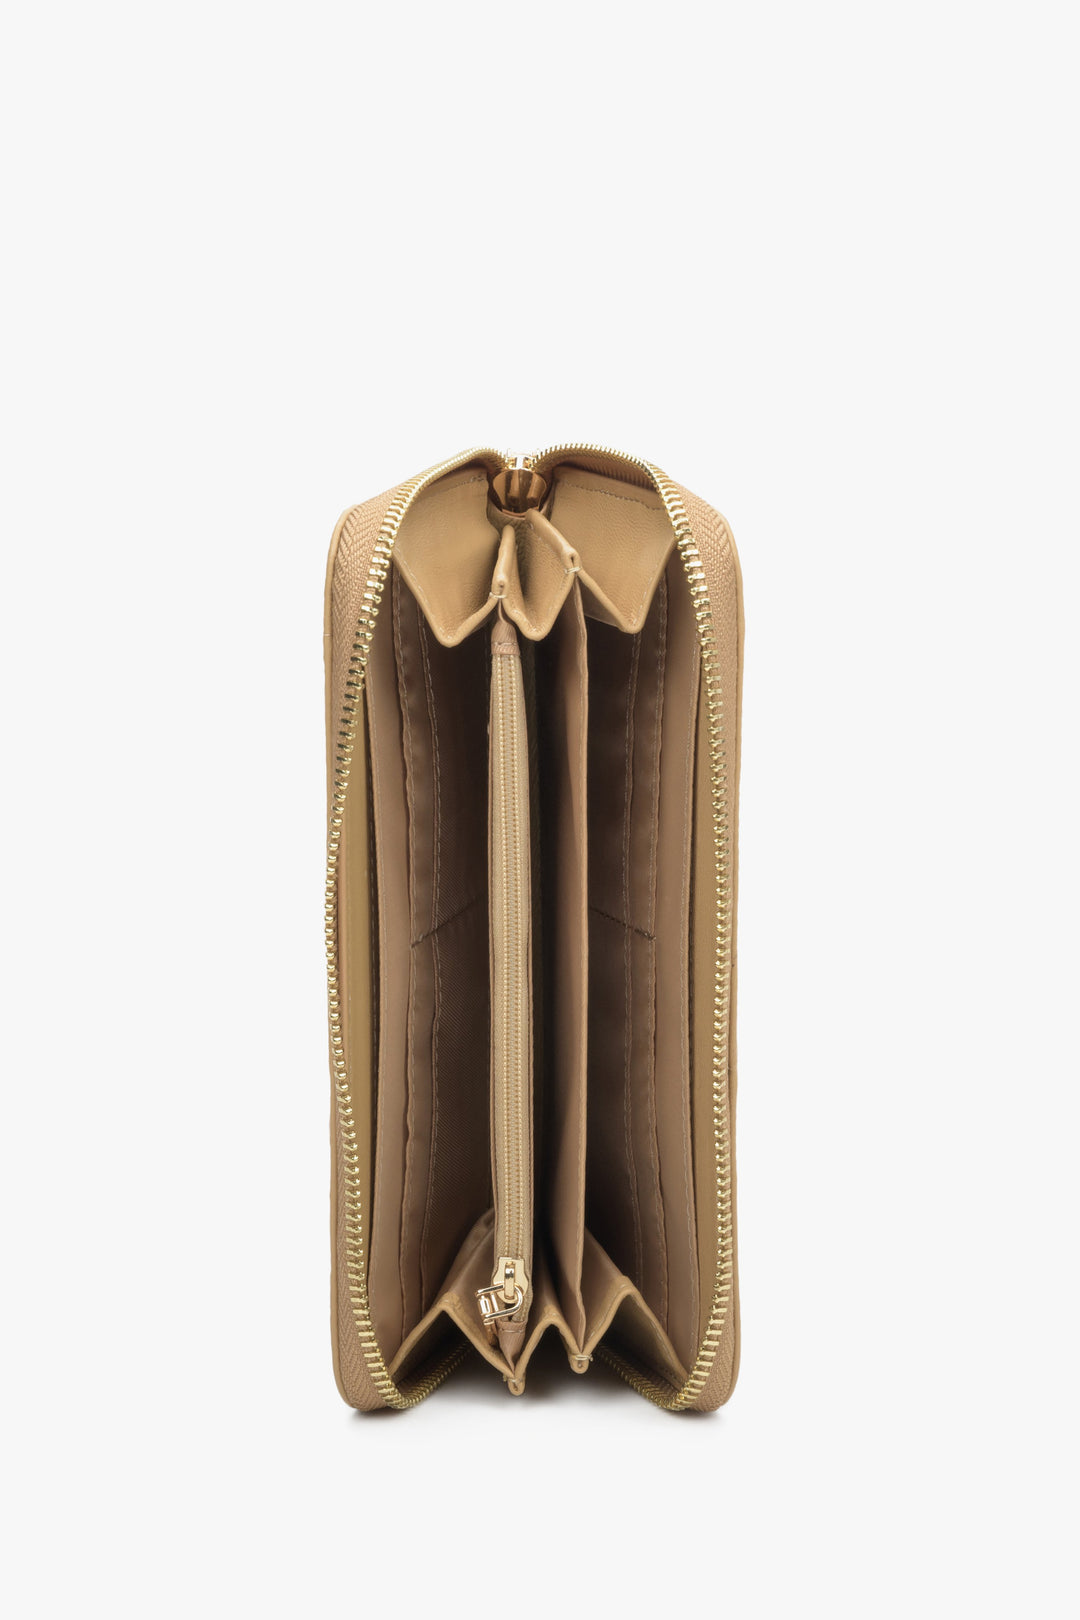 Estro women's large beige continental wallet with a zipper - interior.